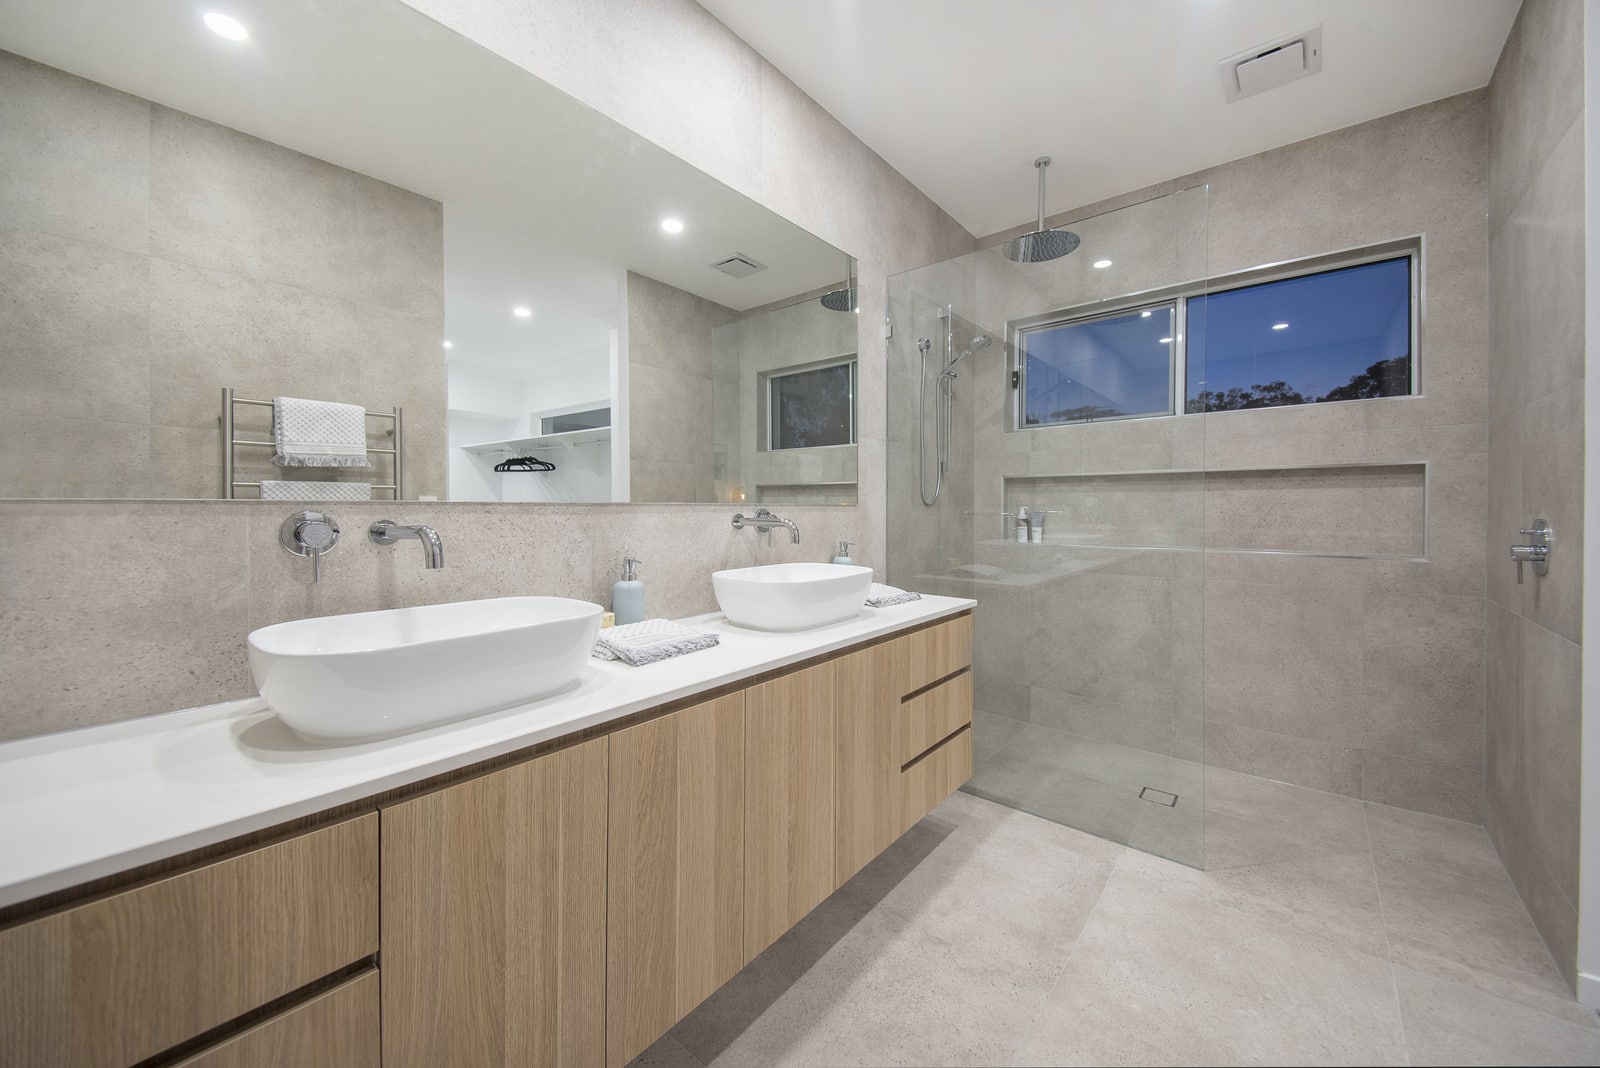 Modern Bathroom Tiles - Totally Flooring In Gold Coast, QLD